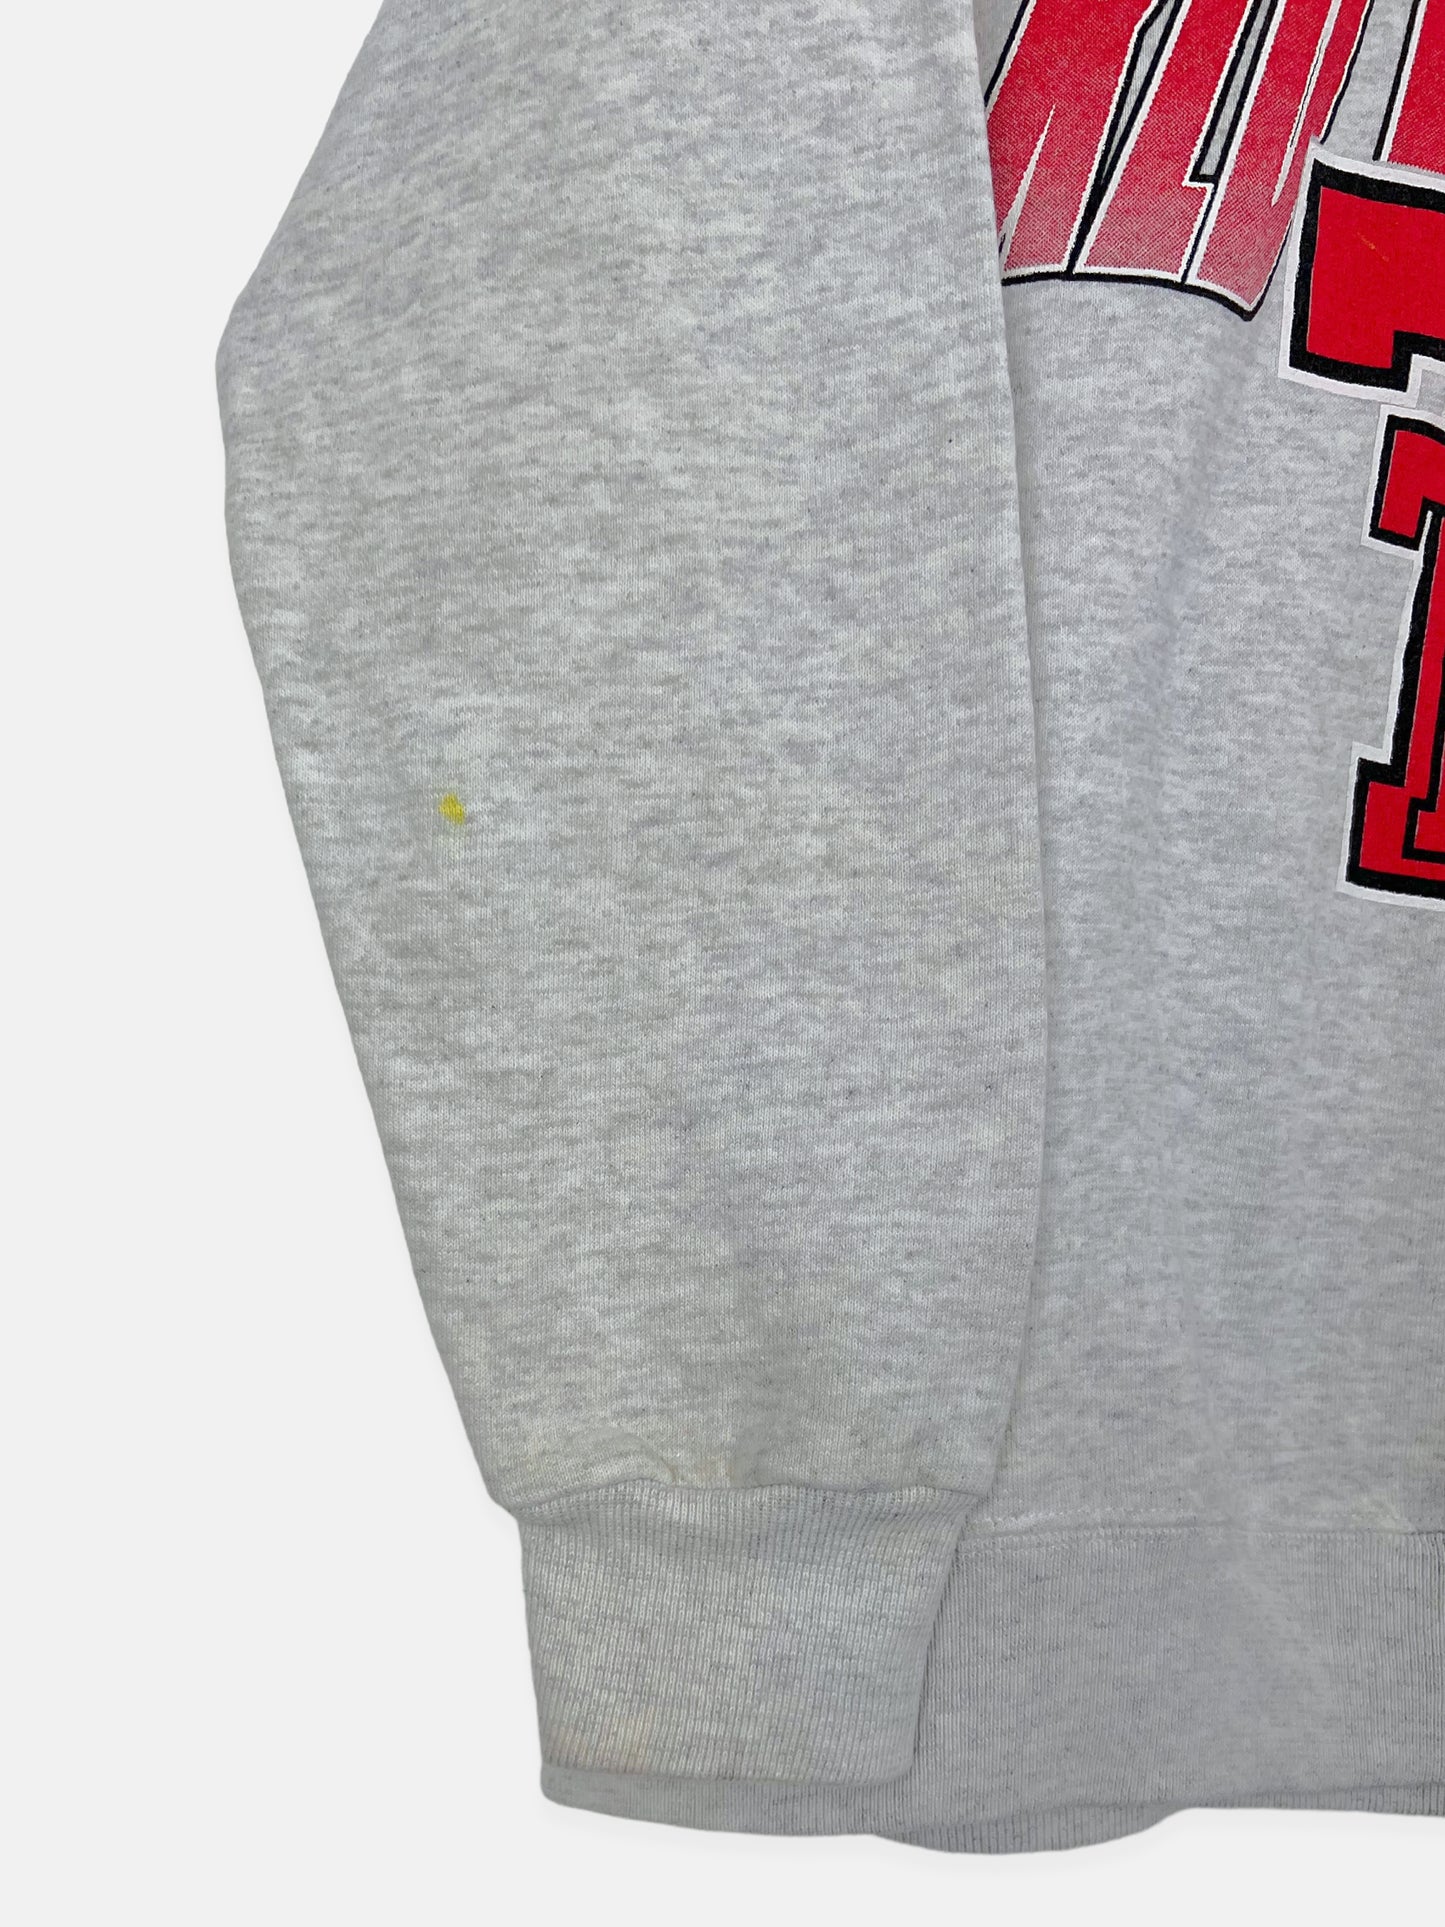 90's Texas Tech Red Raiders Vintage Sweatshirt Size 14